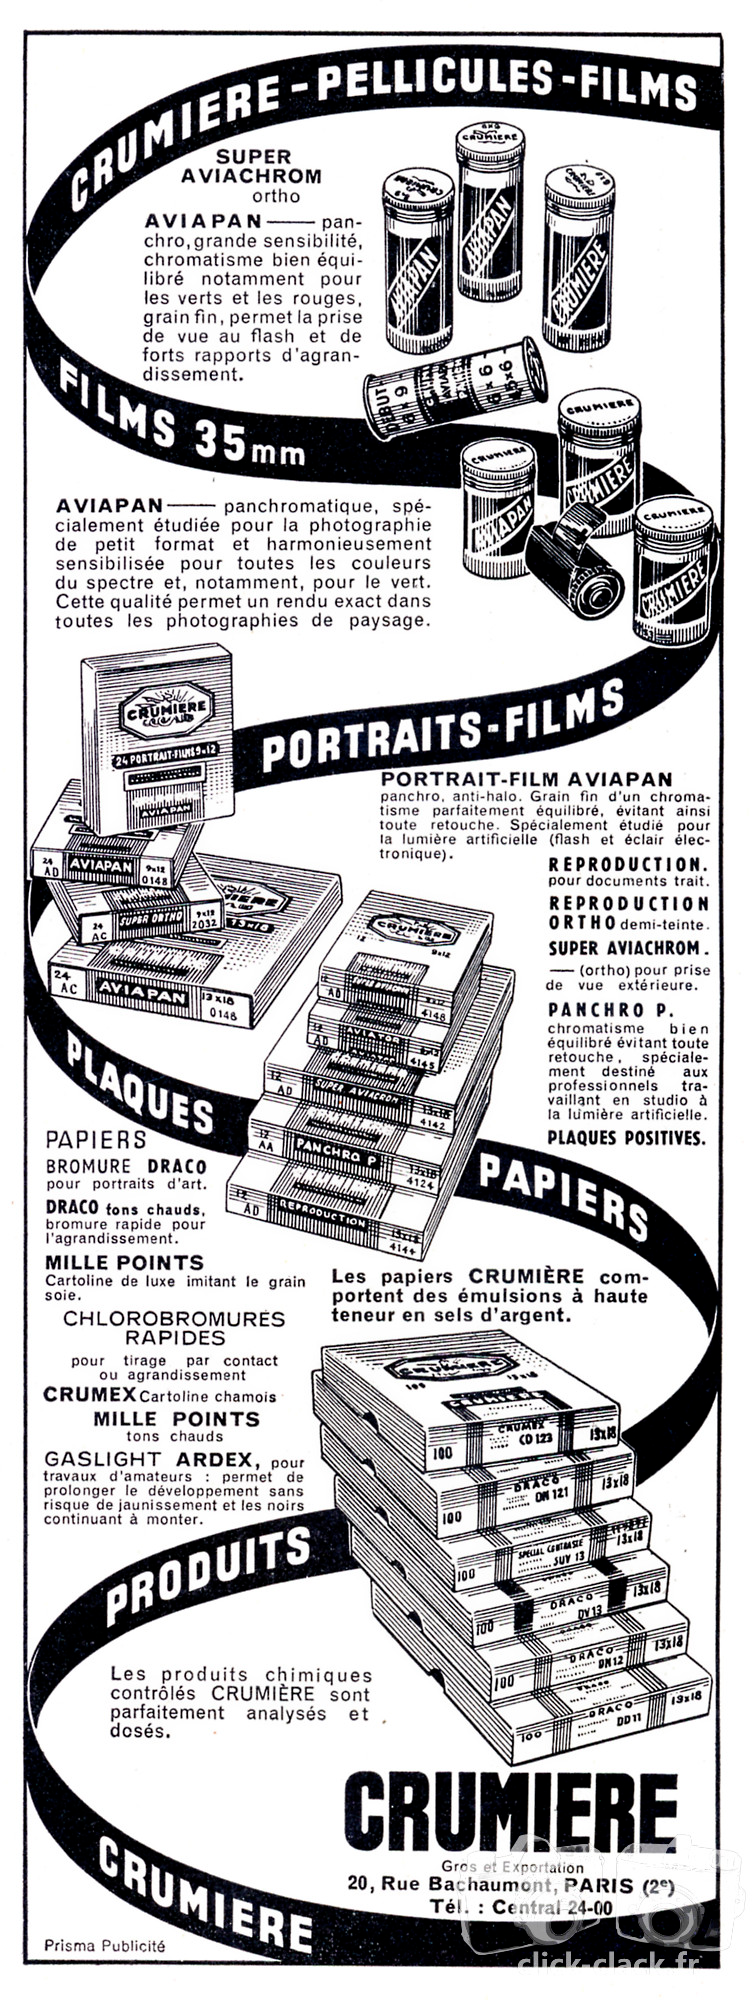 Crumière - Pellicule Super-Aviachrom, Aviapan, Reproduction,  Panchro P, Papier Draco, Mille Points, Arlux, Crumex, Ardex - 1952